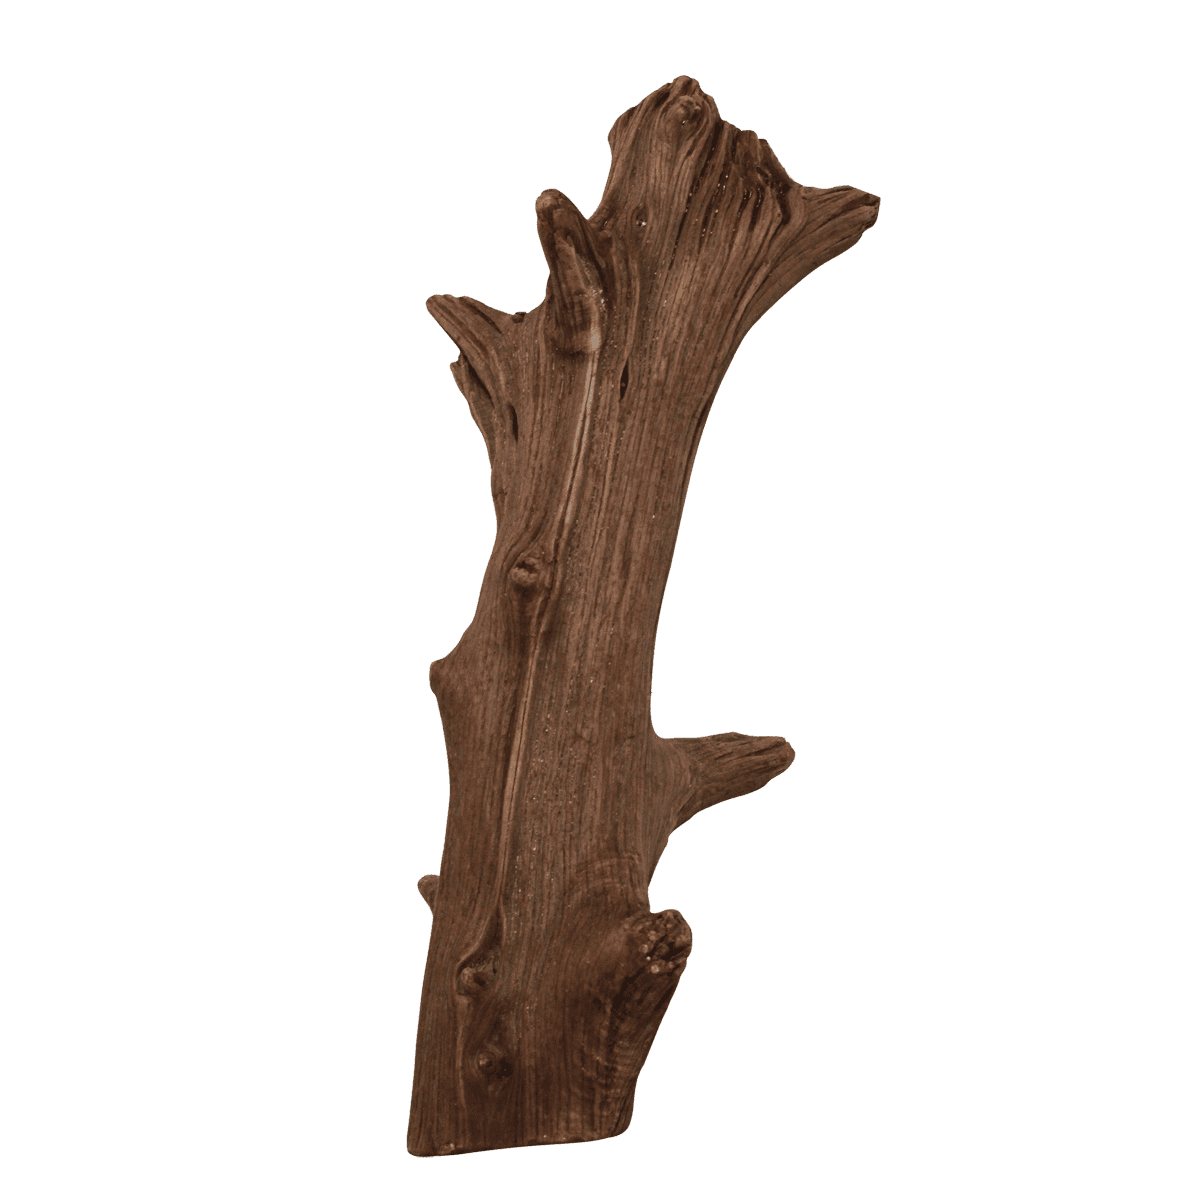 Tumbled Cedar Driftwood (Flat Back) - Matuska Taxidermy Supply Company